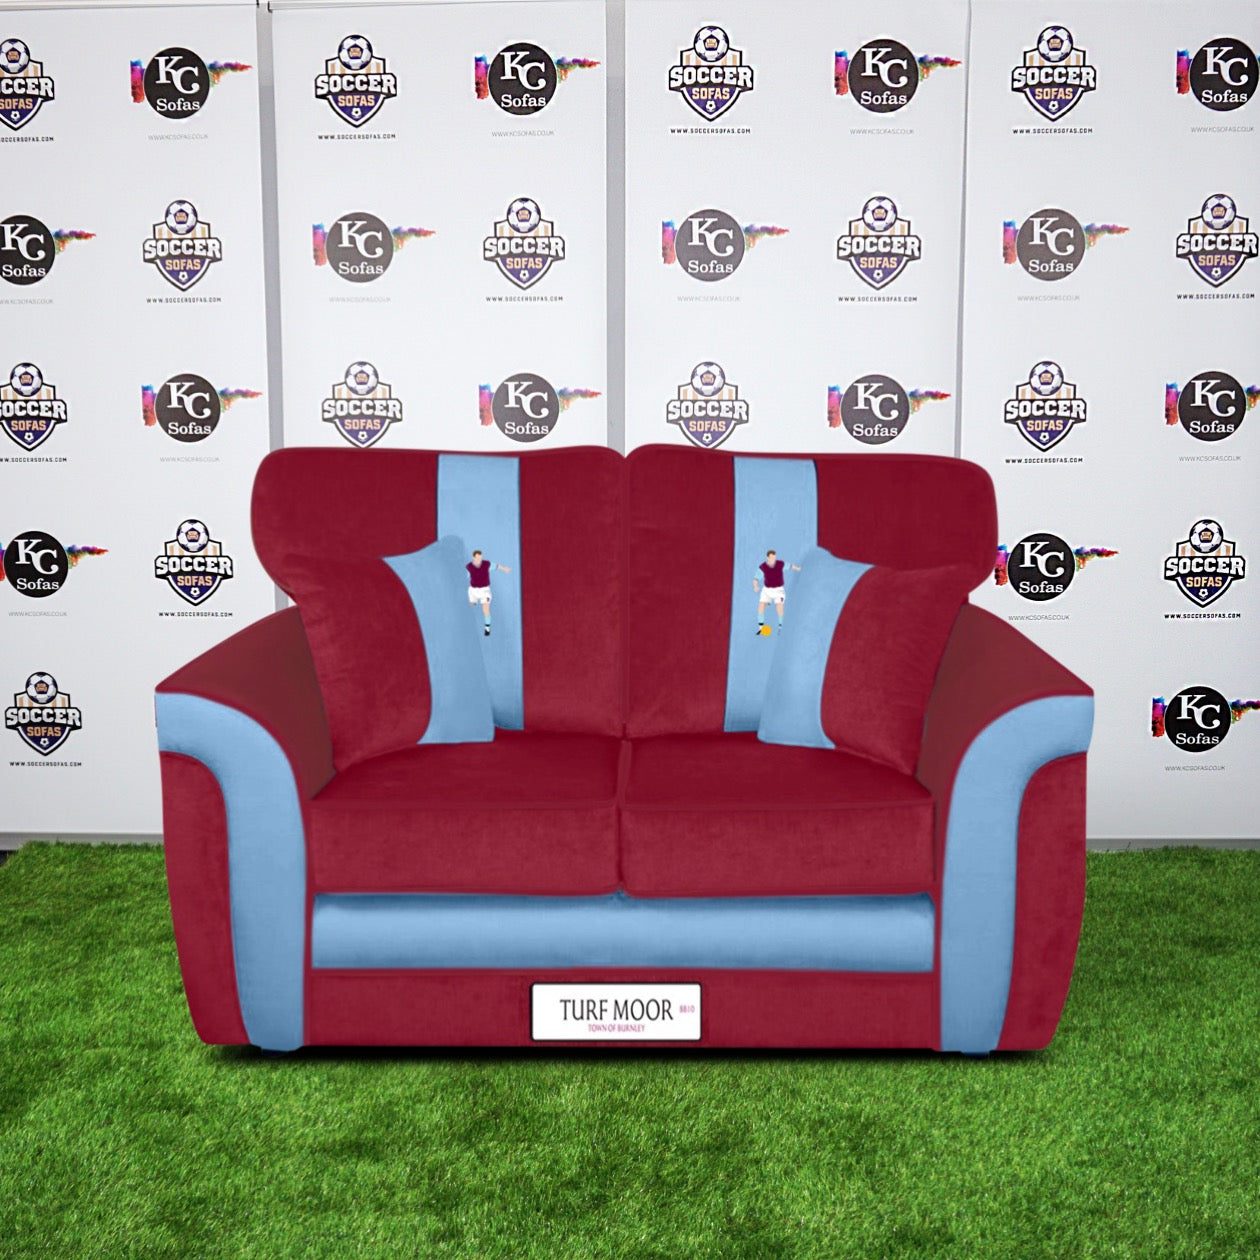 Turf Moor 2 Seater Sofa (Burnley FC)